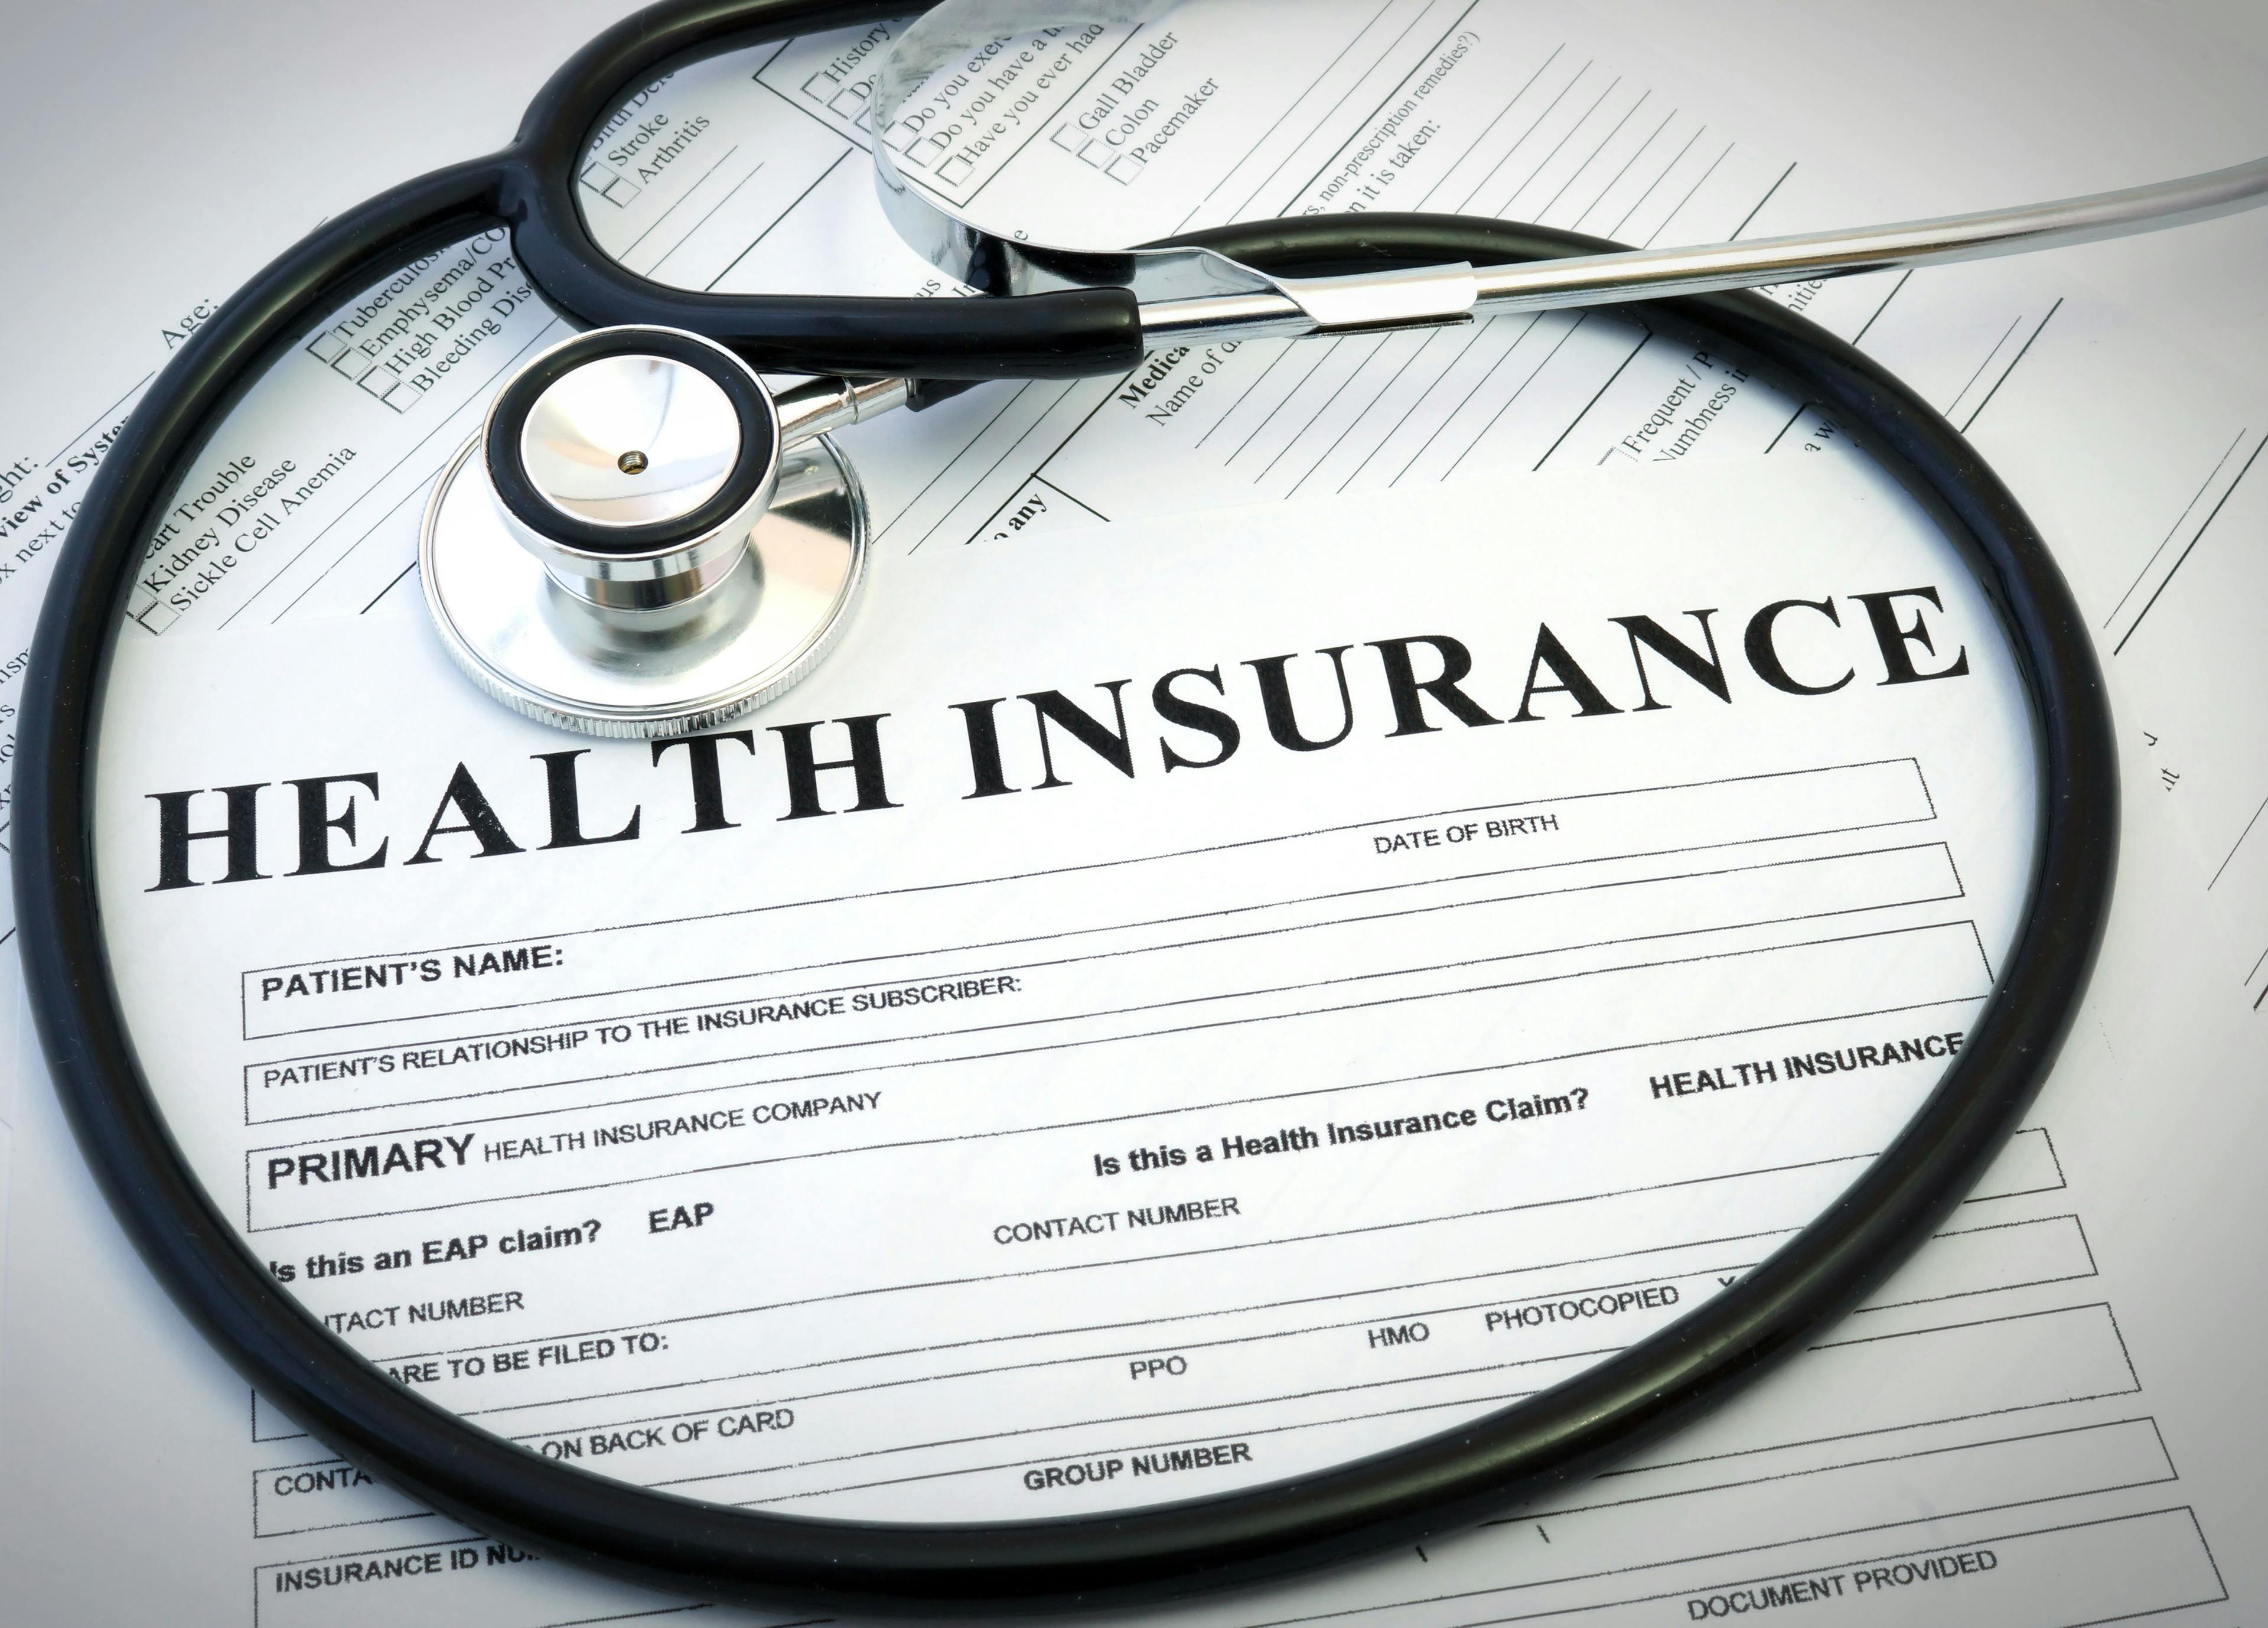 AMA joins class action lawsuit against Cigna’s insurance billing practices